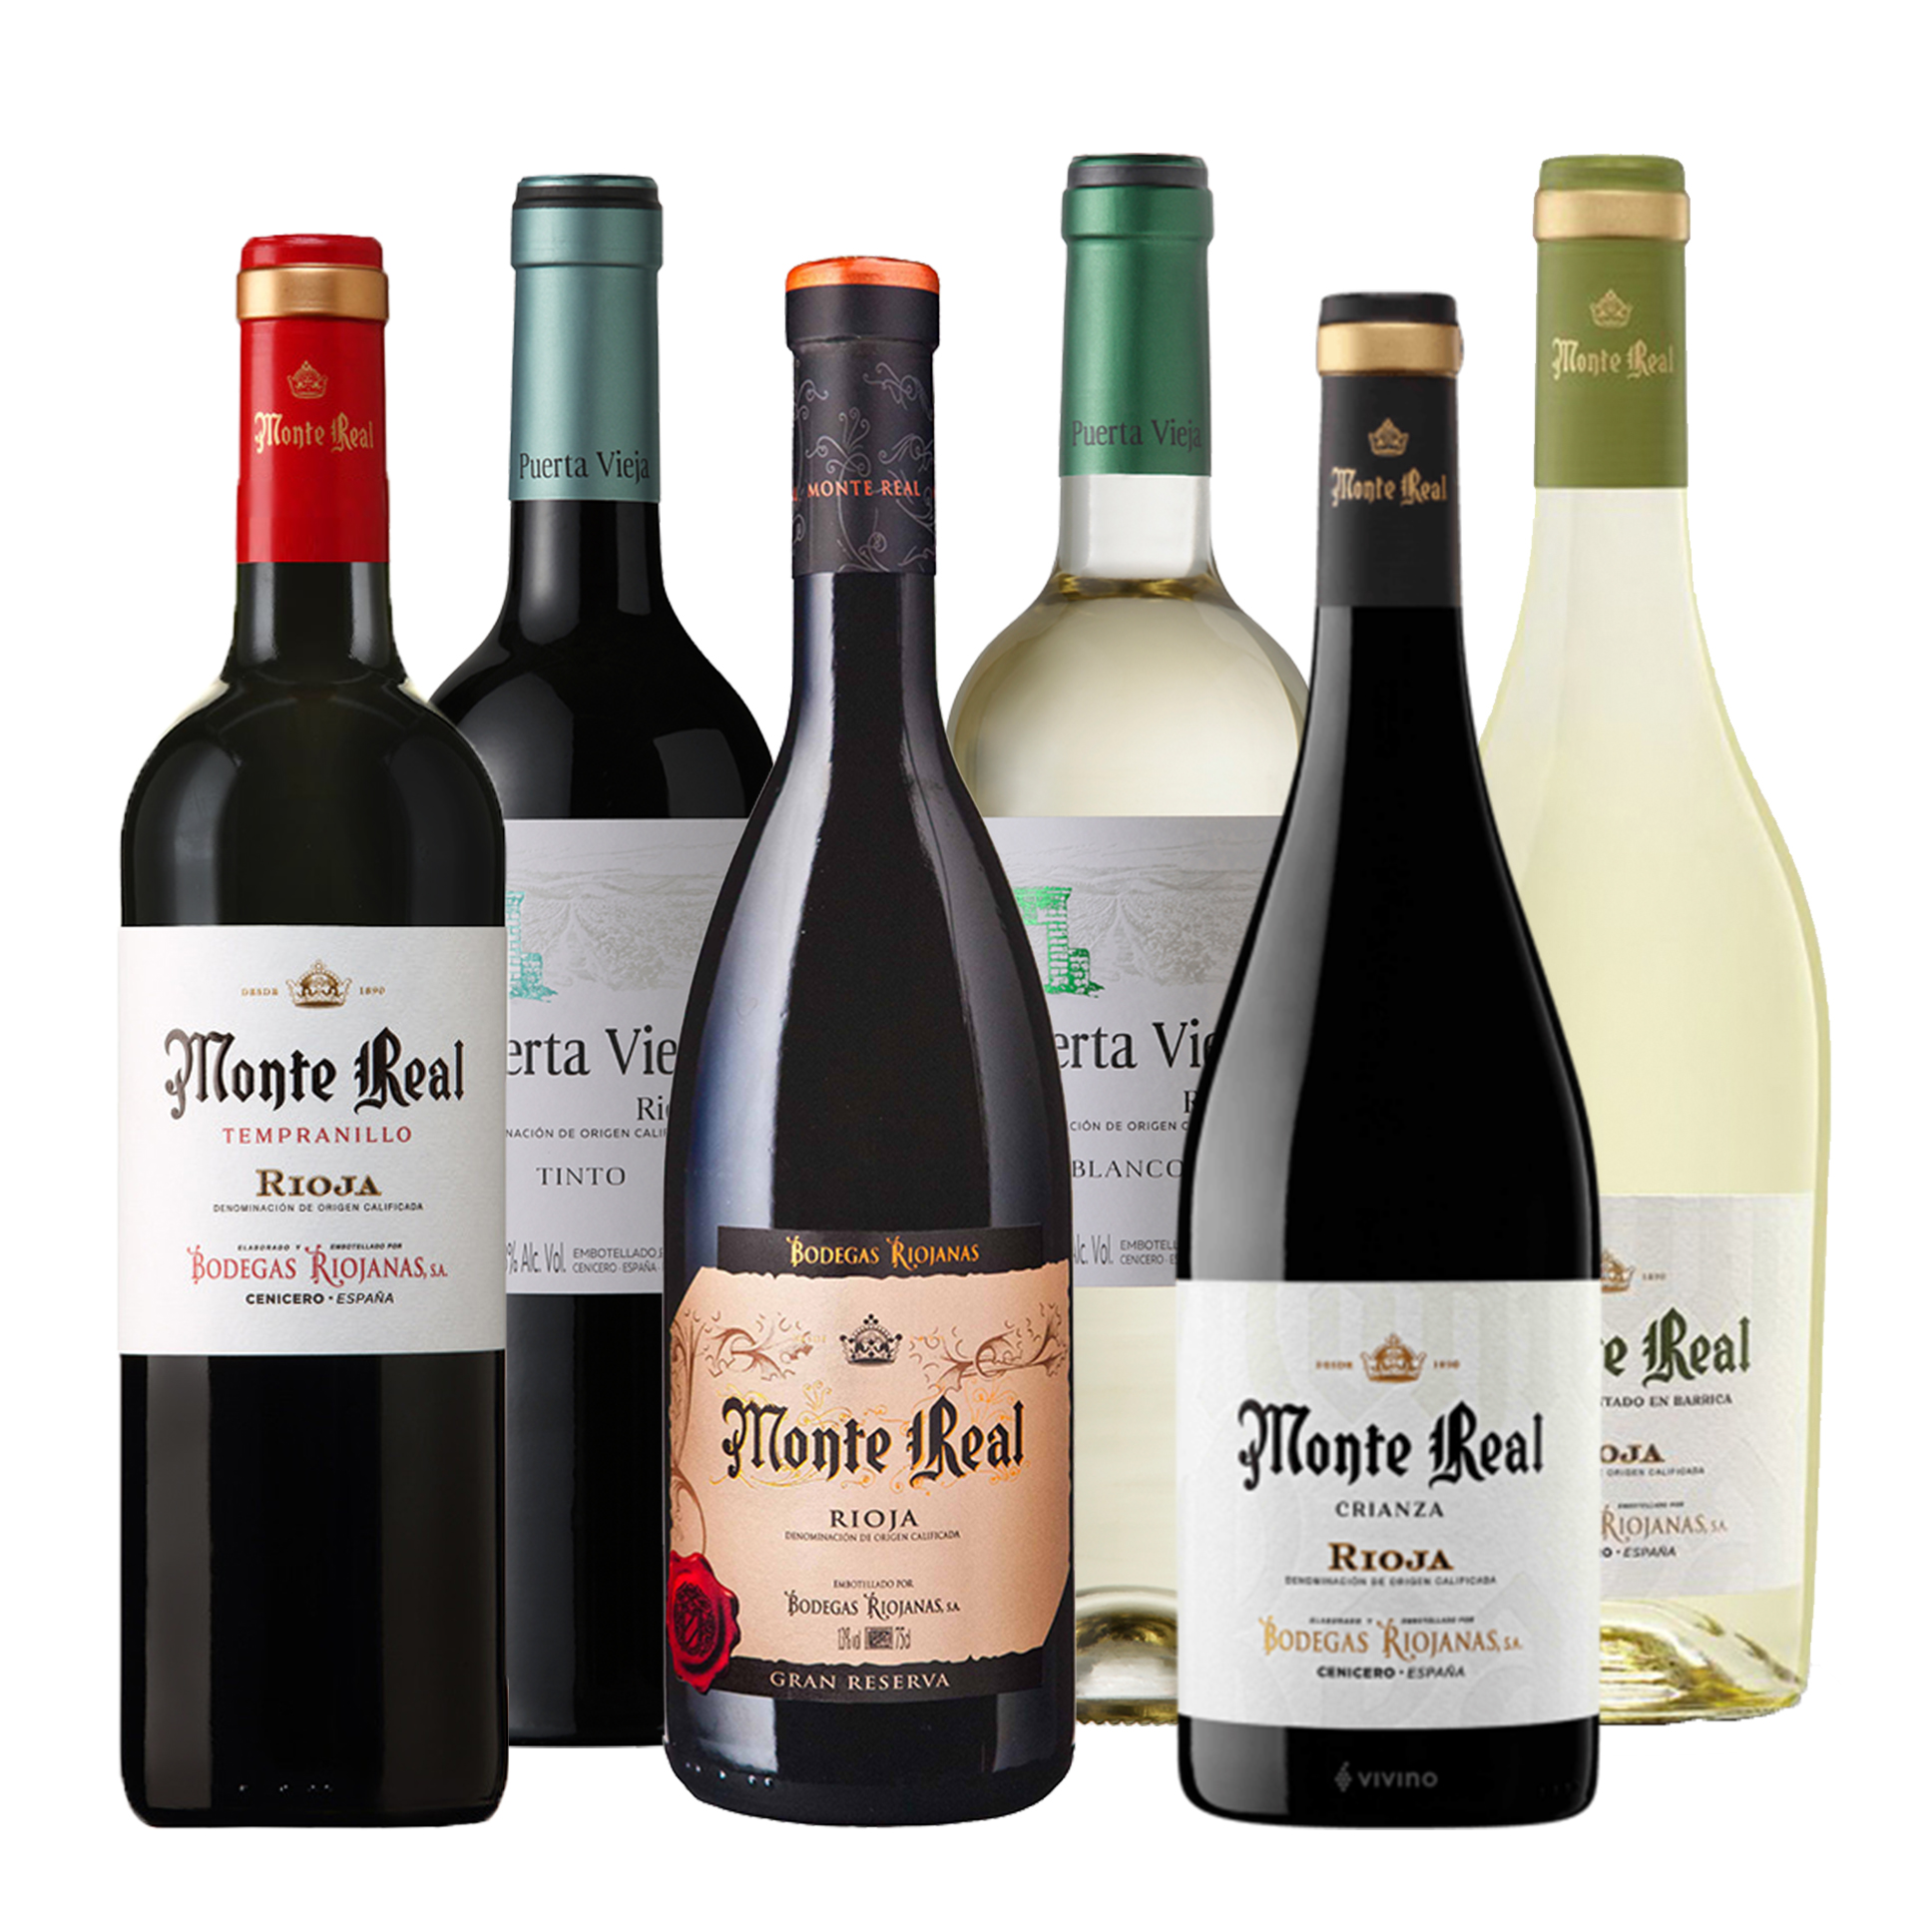 The Rioja Wine Case of 6